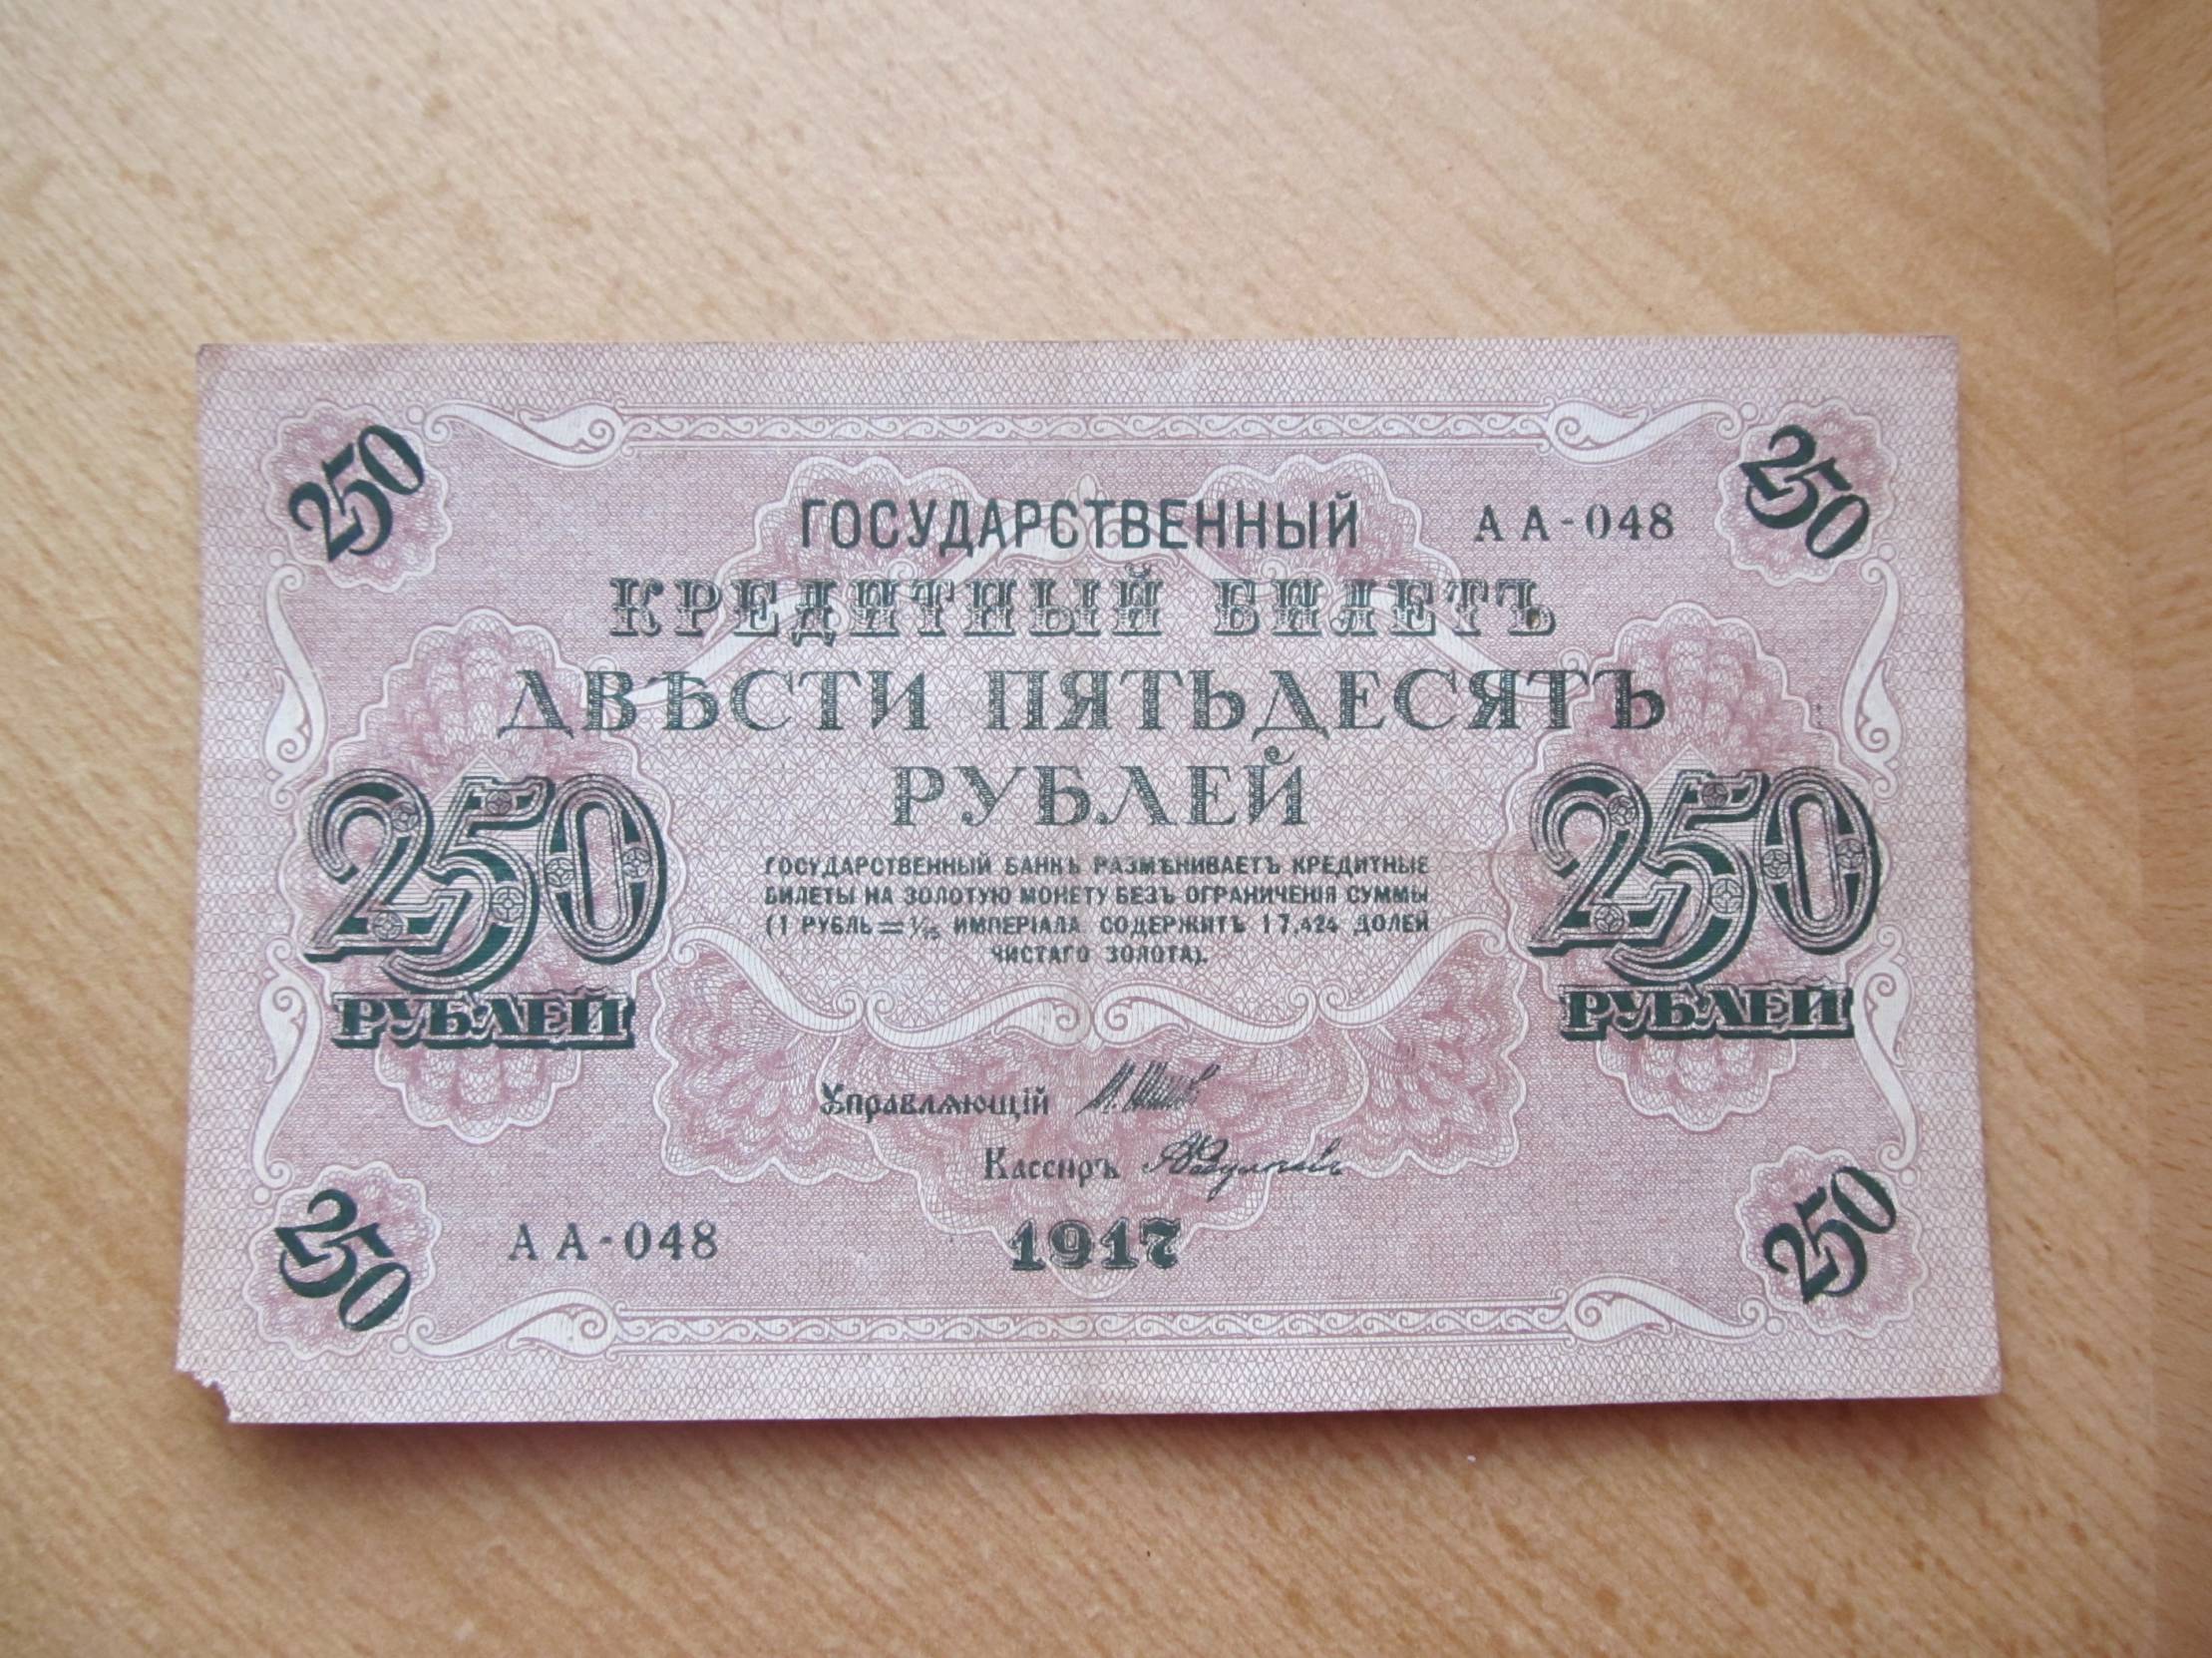 250 рублей цены